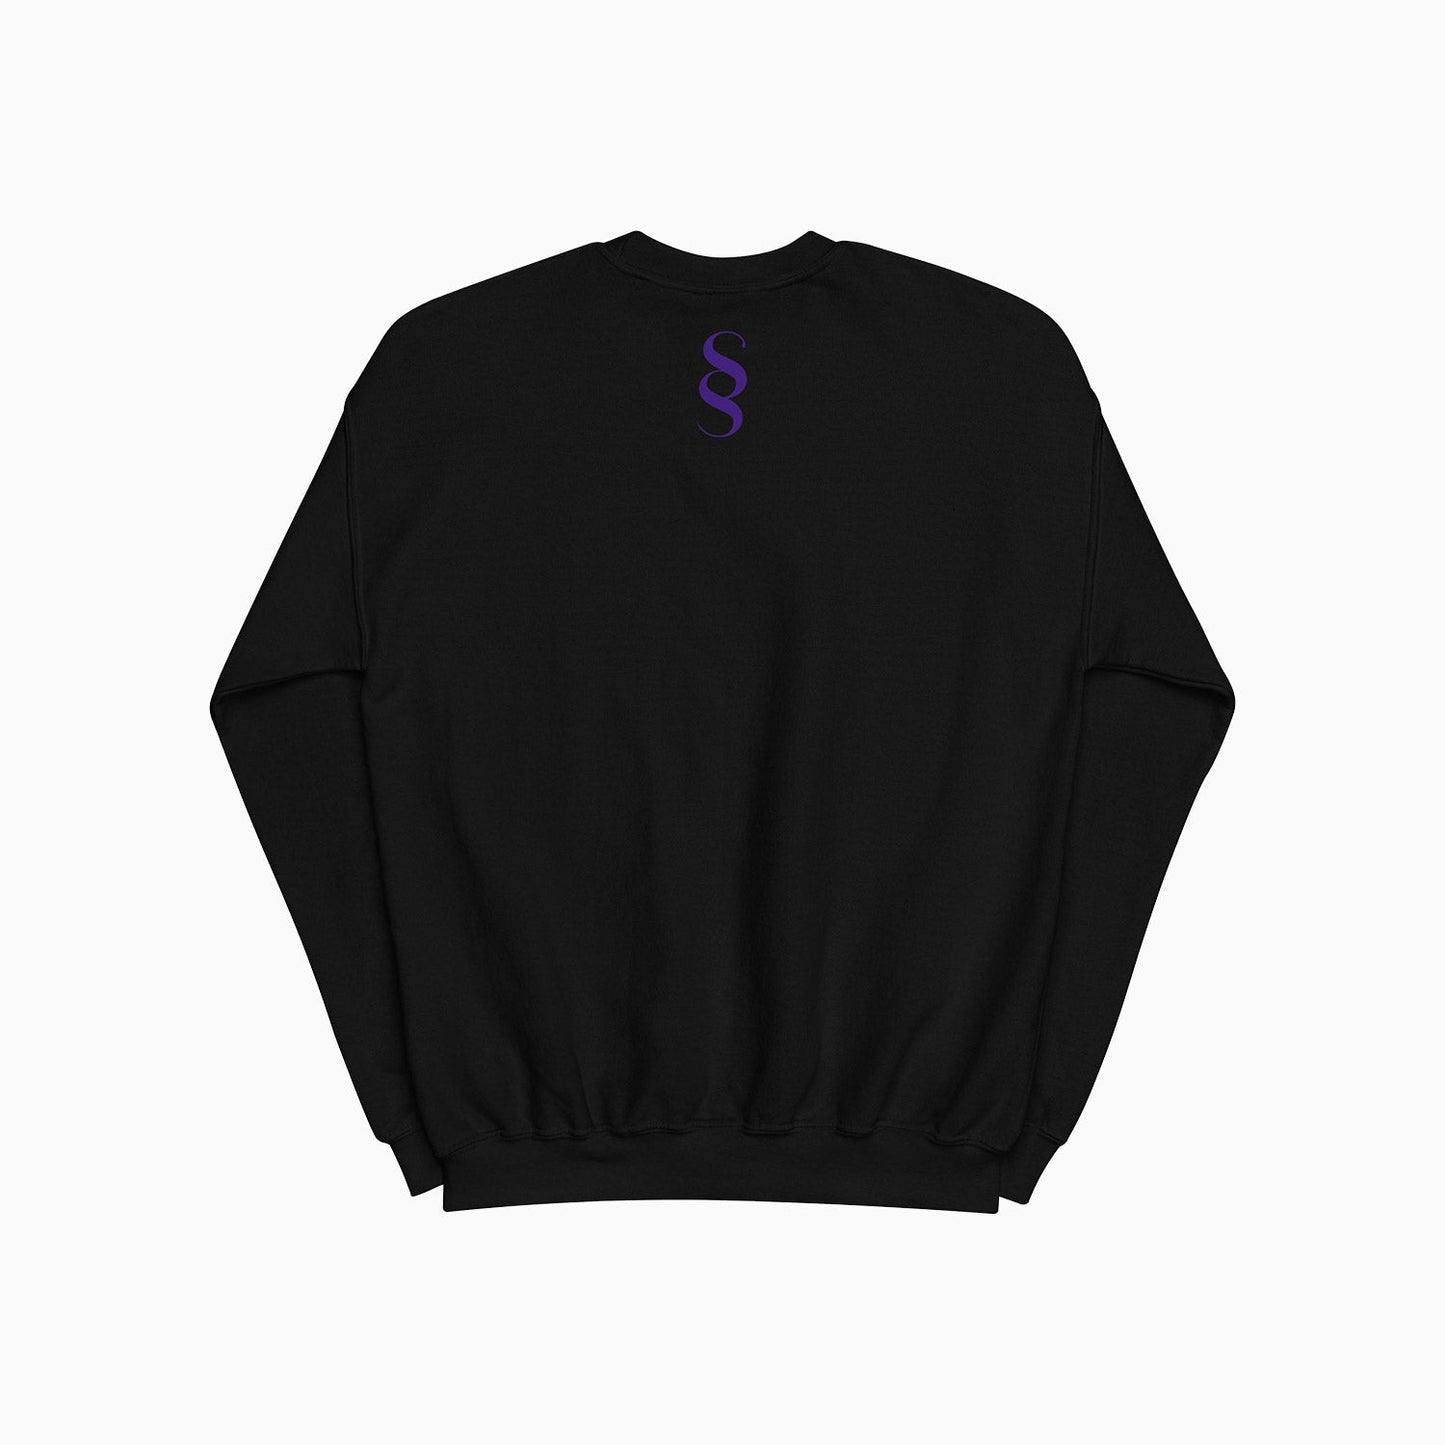 Men's Basic Printed Black Sweatshirt